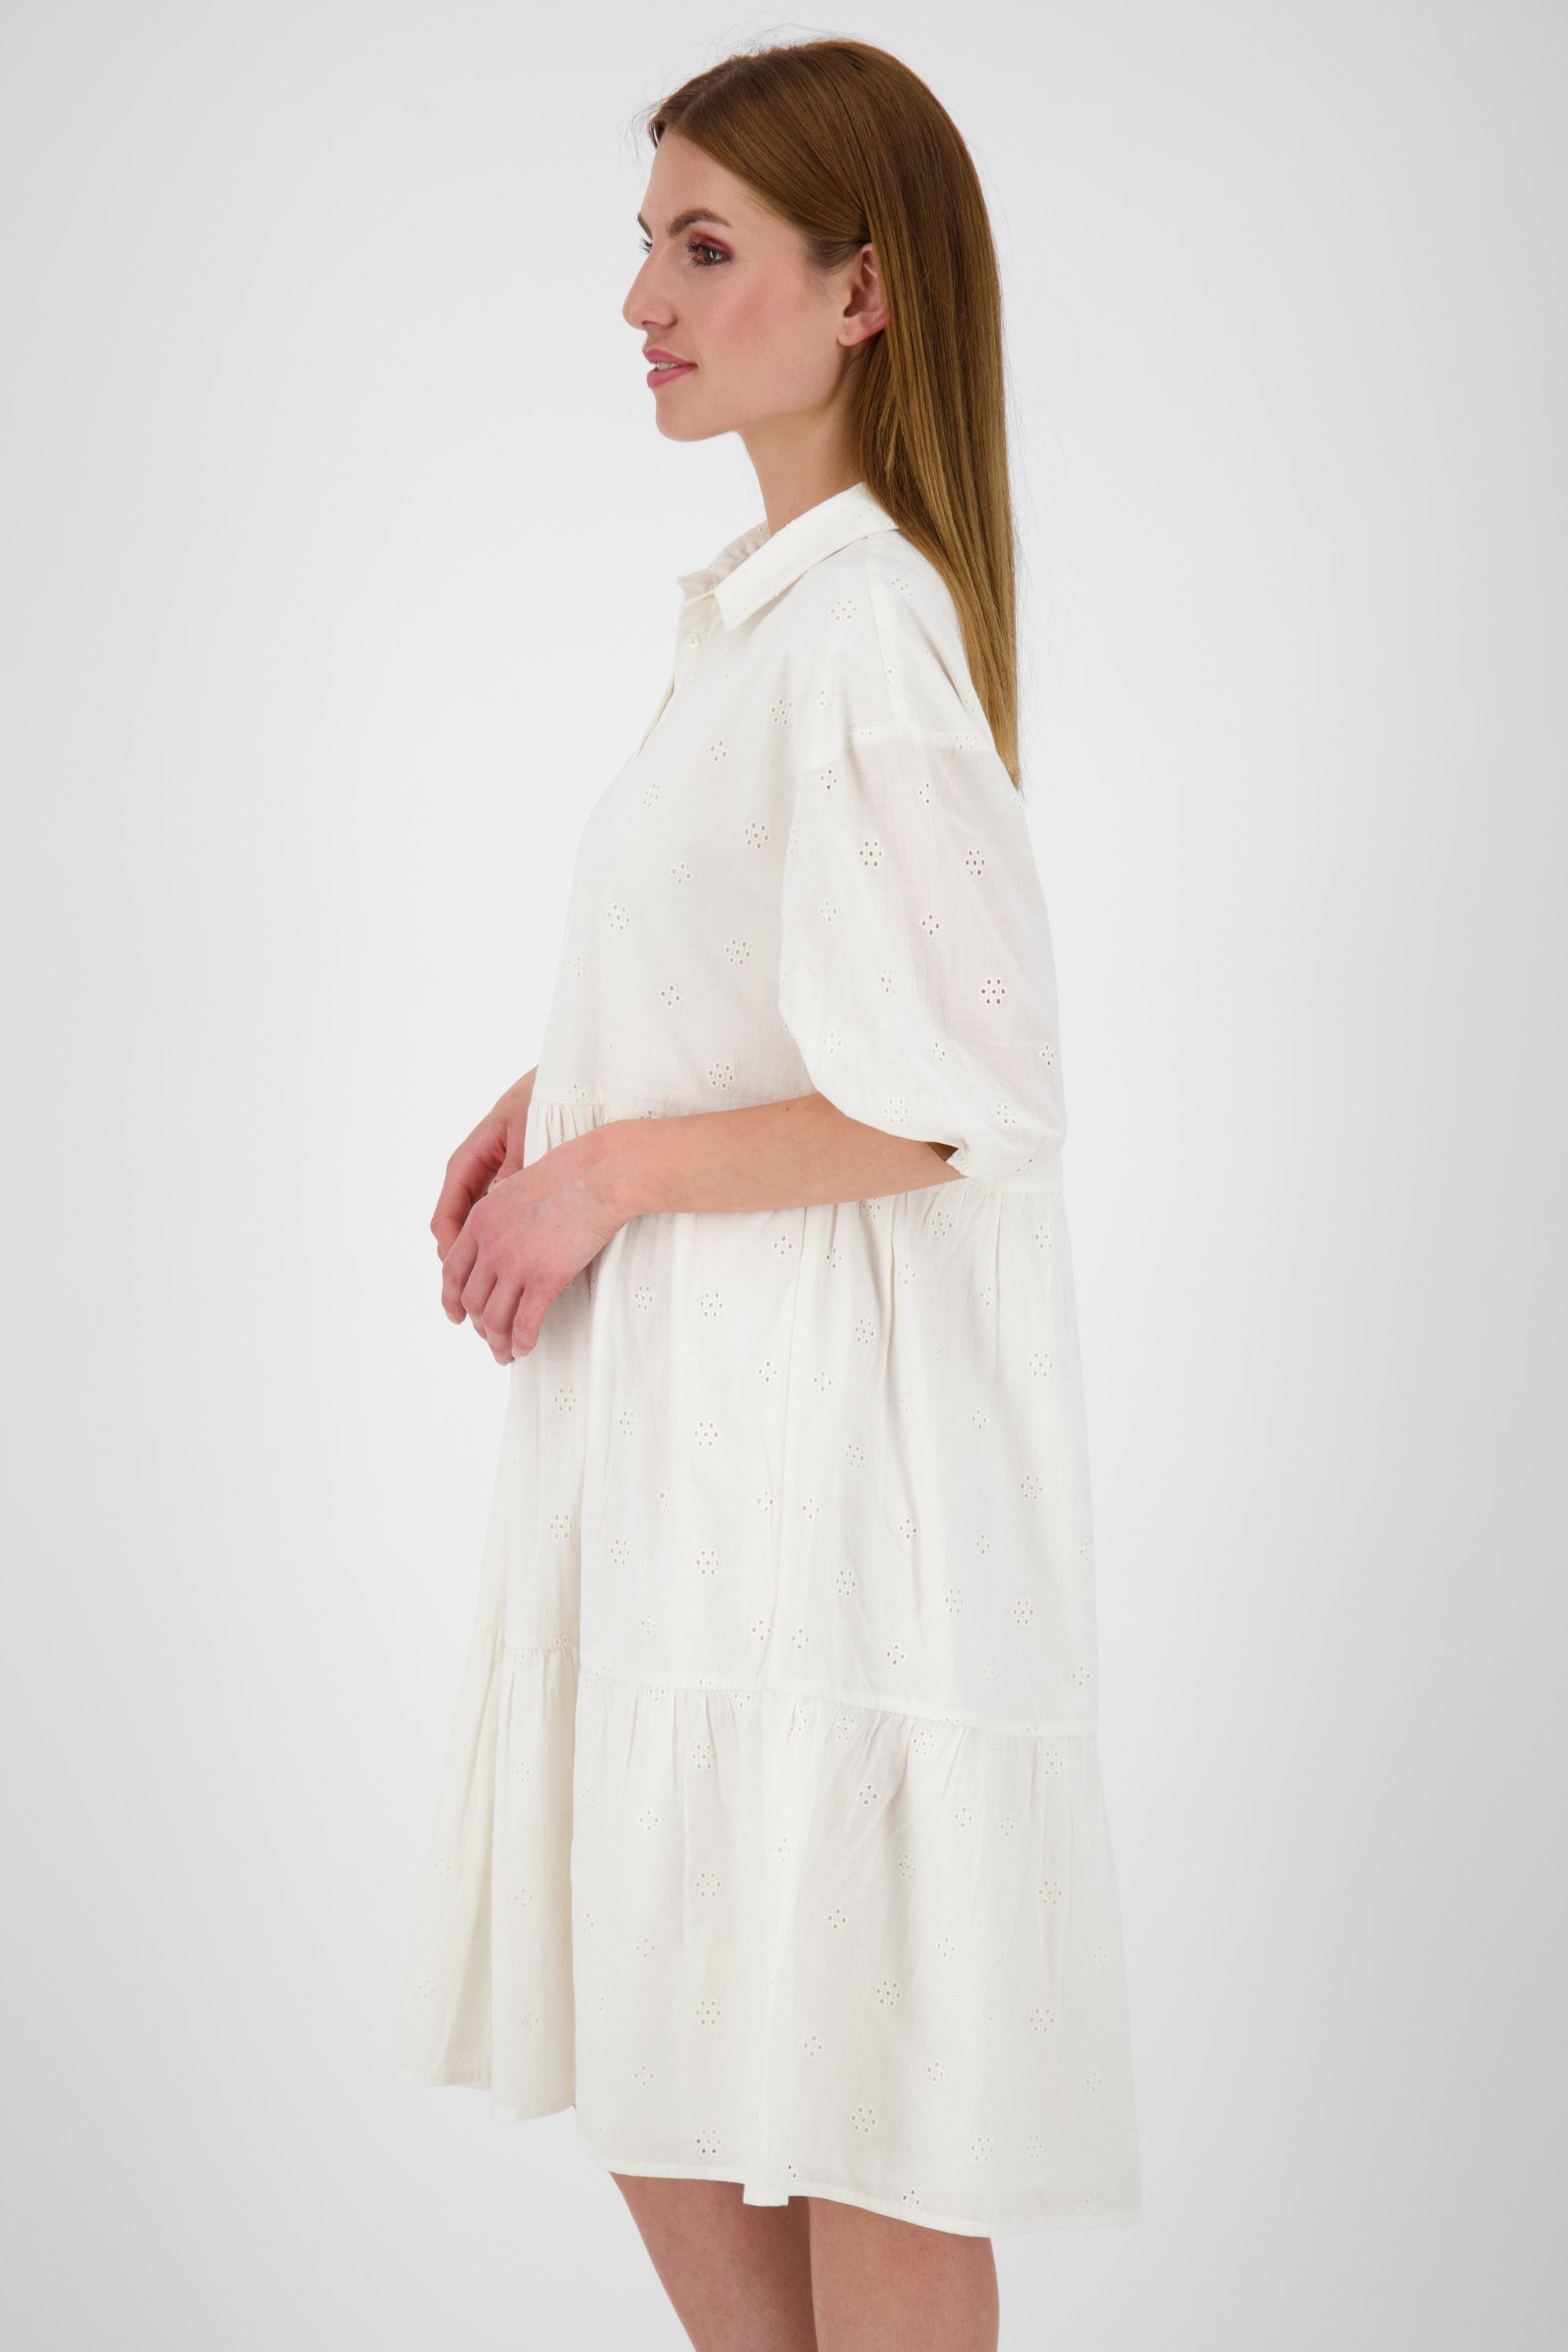 SalomeAK Kleid Jerseykleid E white Kickin Dress Damen Sommerkleid, & Alife